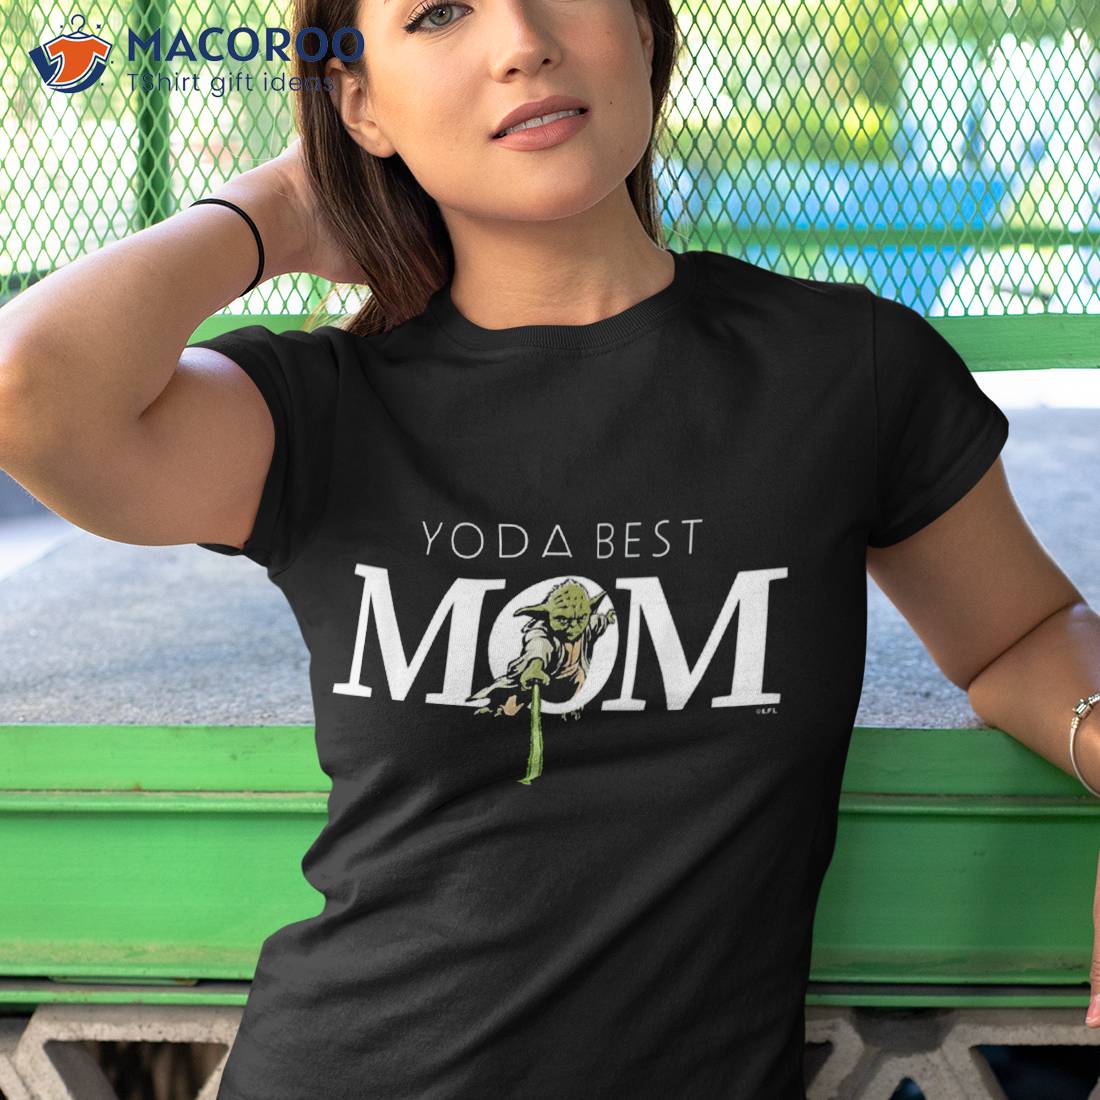 https://images.macoroo.com/wp-content/uploads/2023/04/star-wars-yoda-best-mom-lightsaber-mother-amp-acirc-amp-128-amp-153-s-day-gift-shirt-tshirt-1.jpg